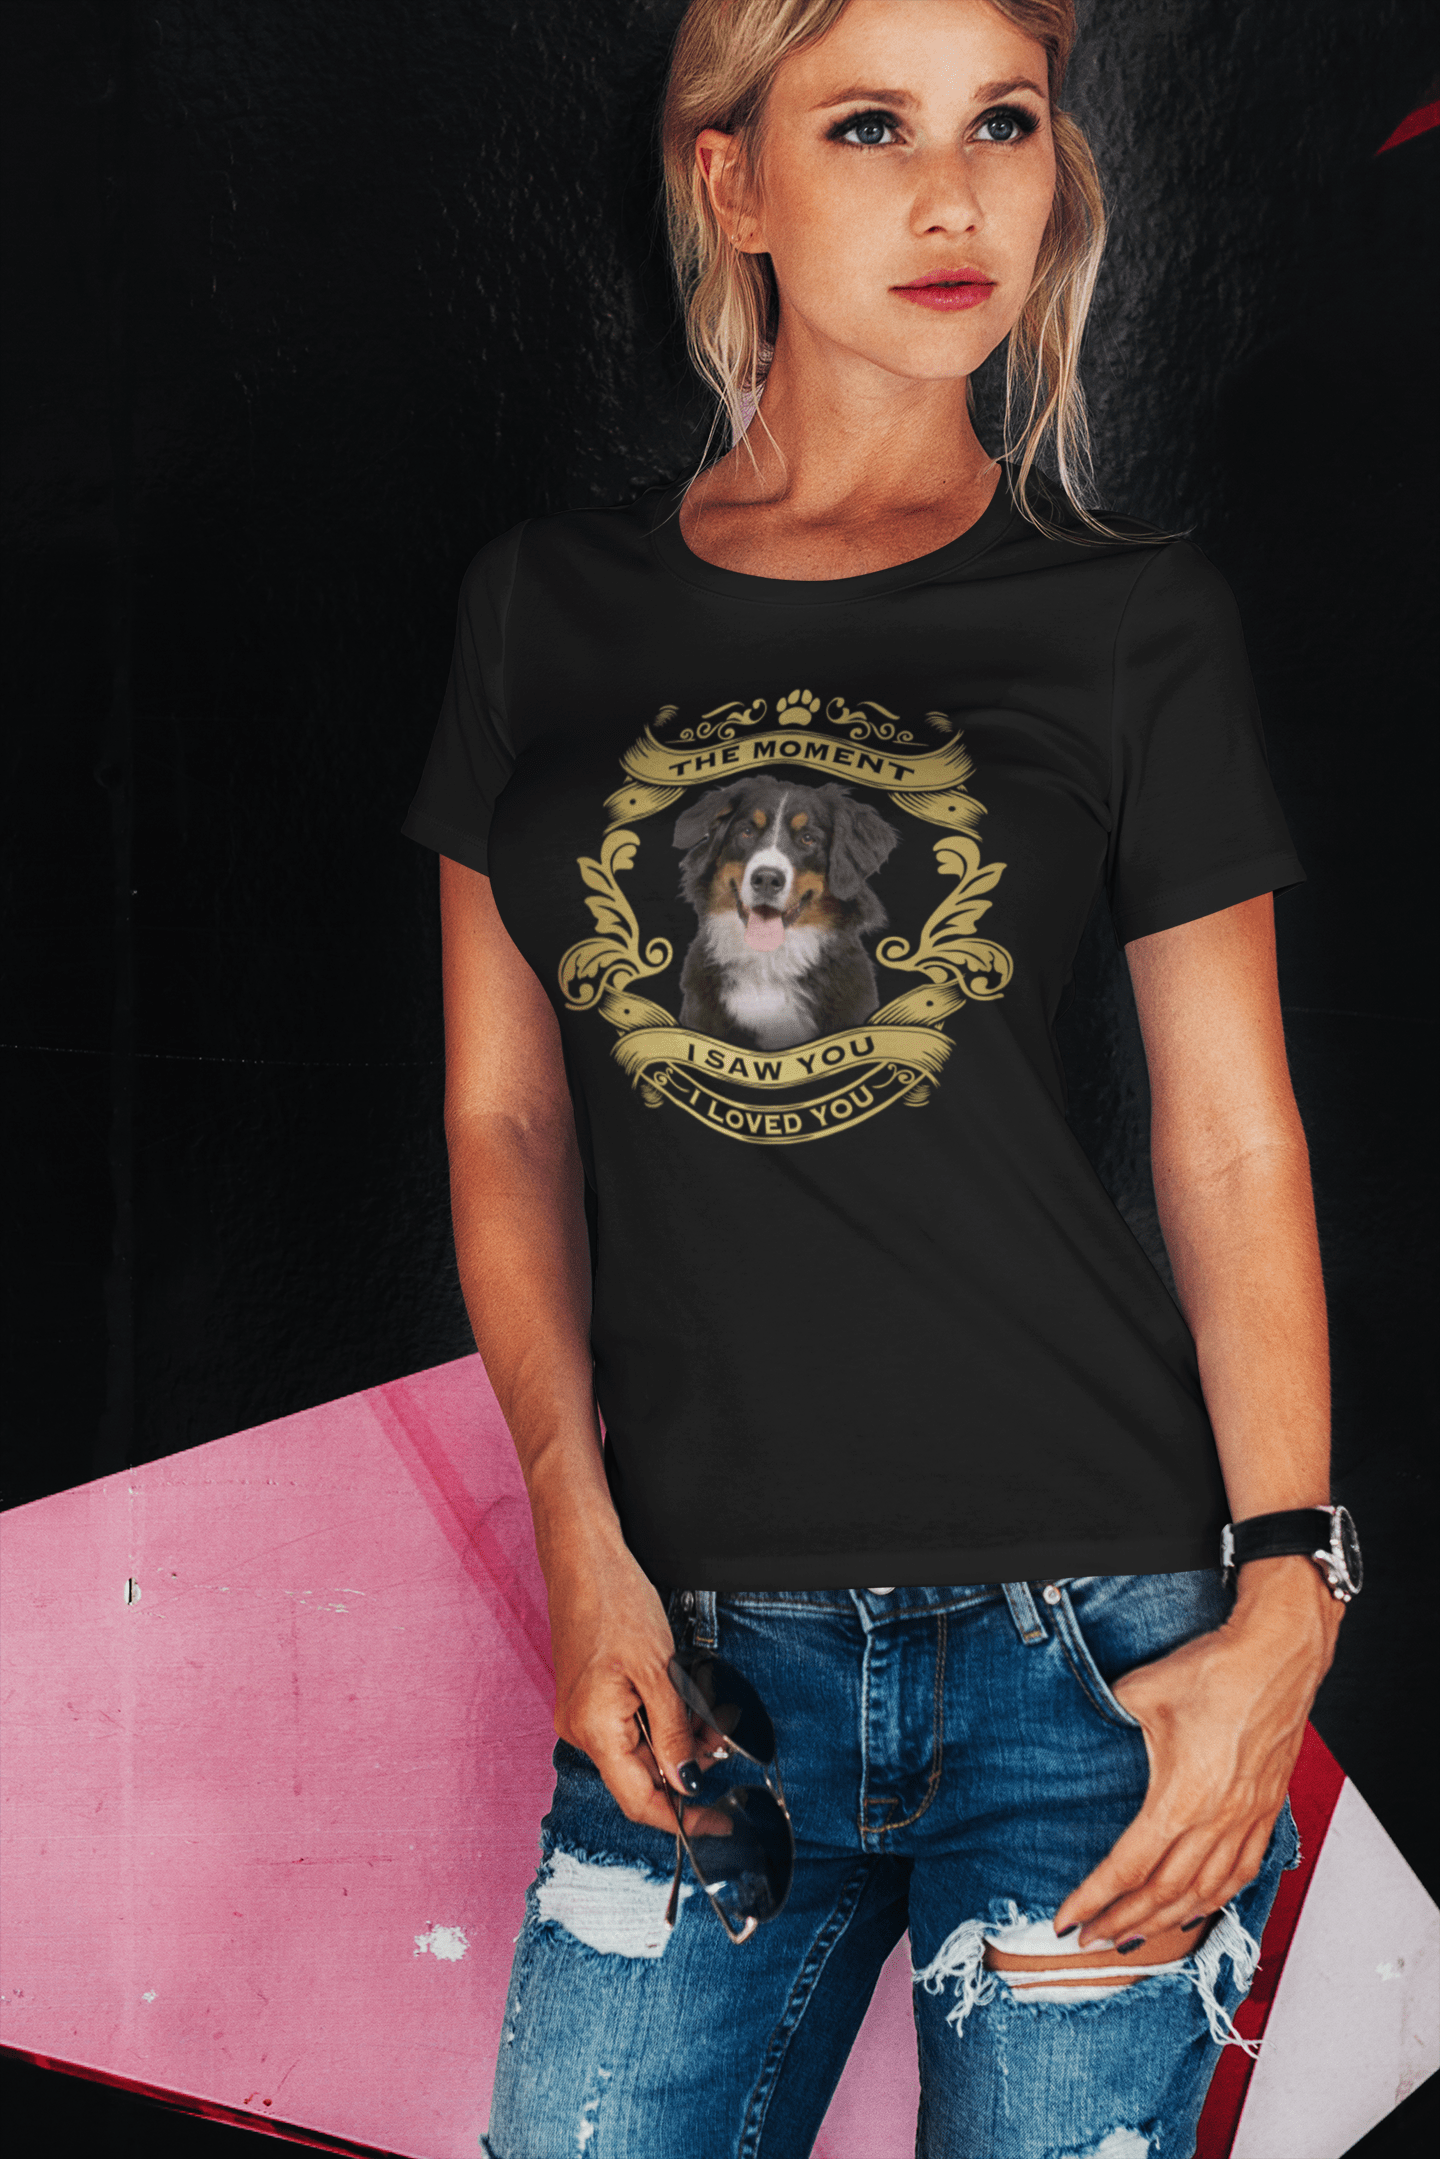 ULTRABASIC Damen Bio-T-Shirt Berner Sennenhund – Moment I Saw You I Loved You Welpen-T-Shirt für Damen